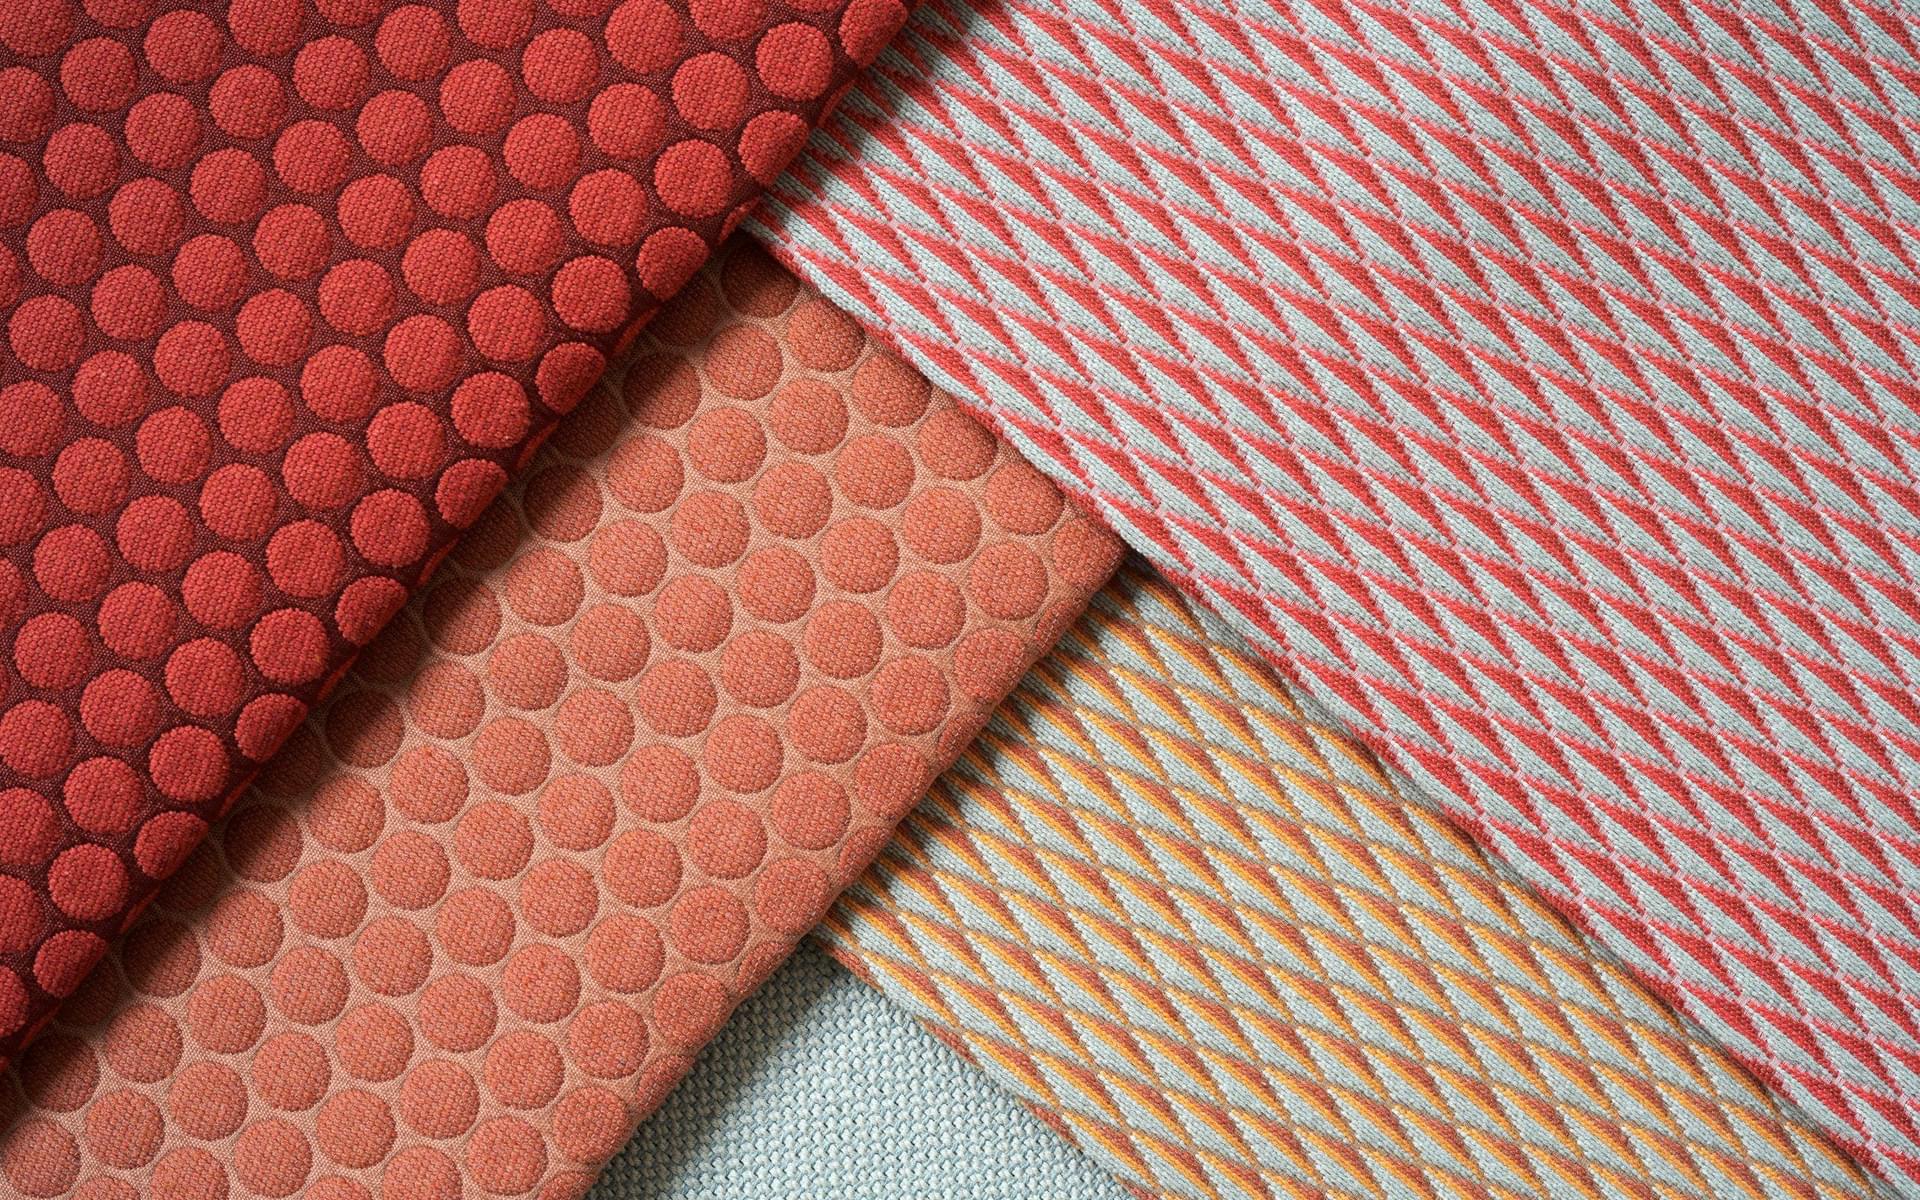 Textiles Upholstery Momentum Aleksandra Gaca Sugesti ON2 3x Composition Aleksandra Gaca Studio Matusiak Eddy Wenting2 SILVER resized